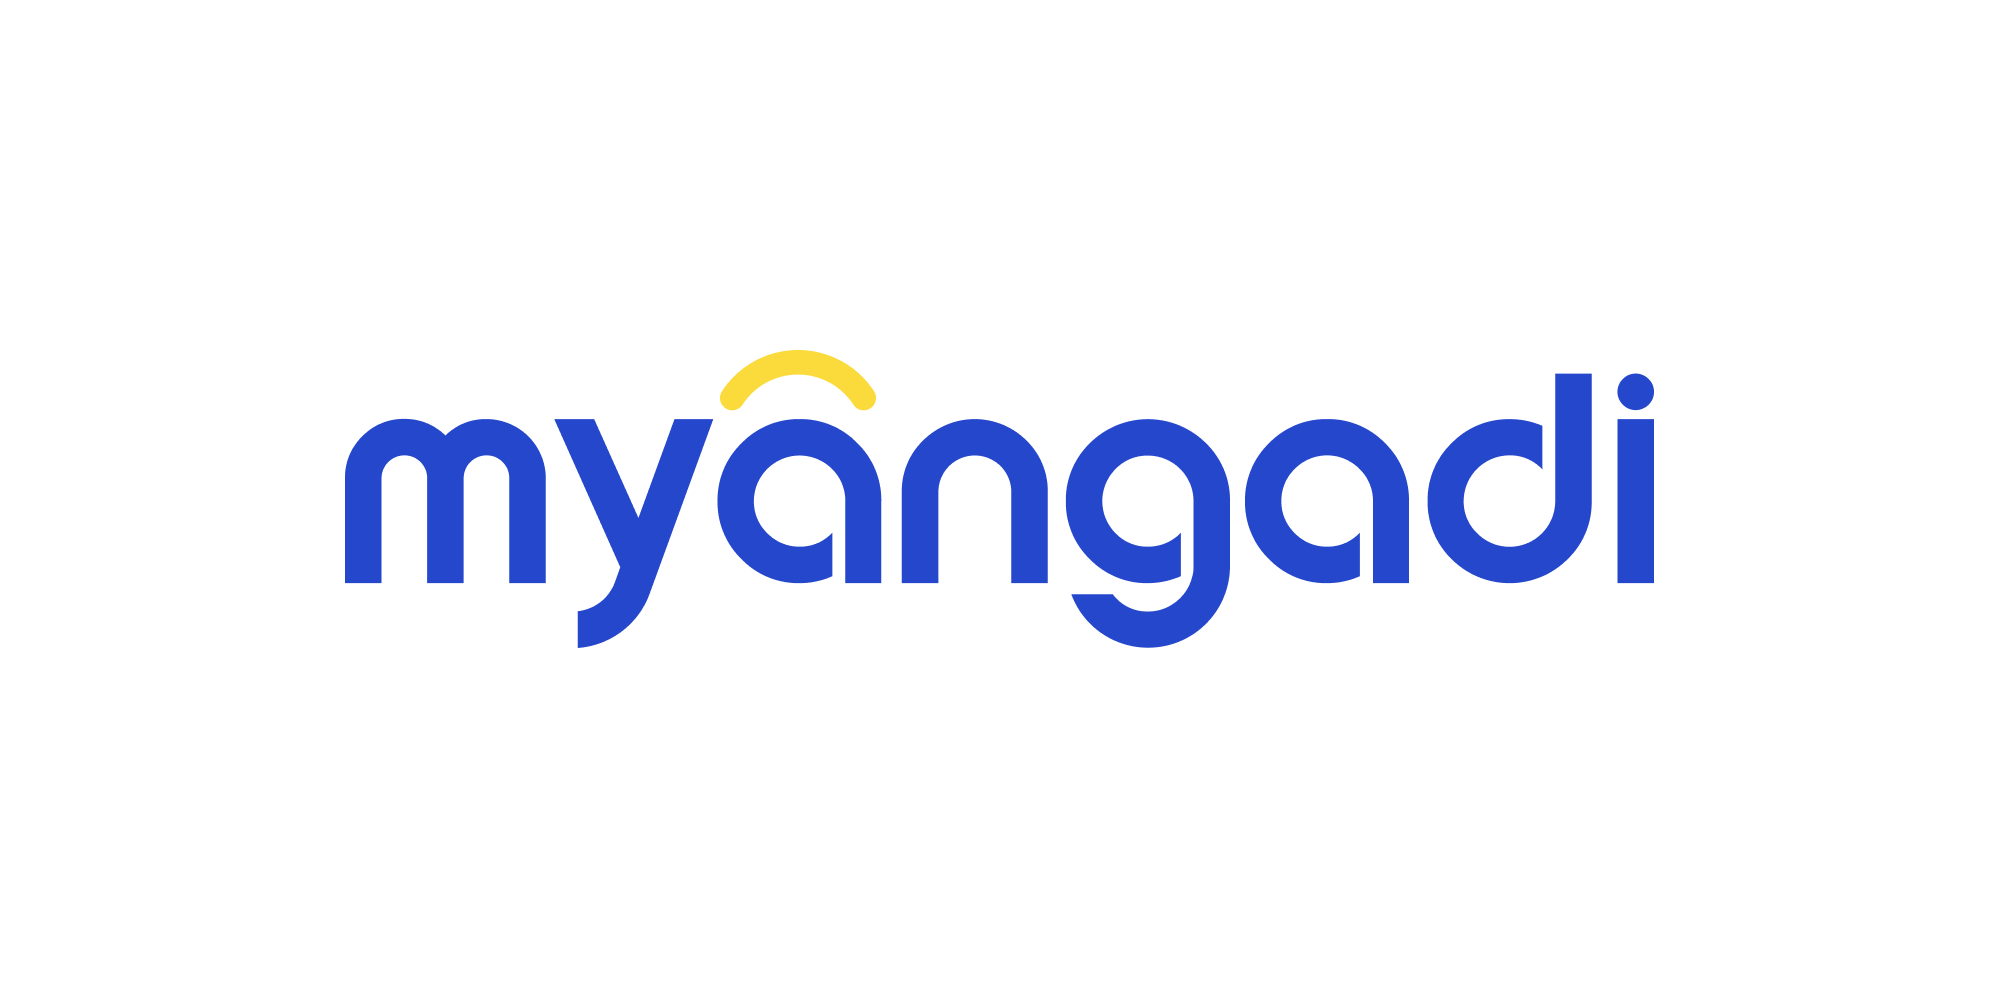 Myangadi